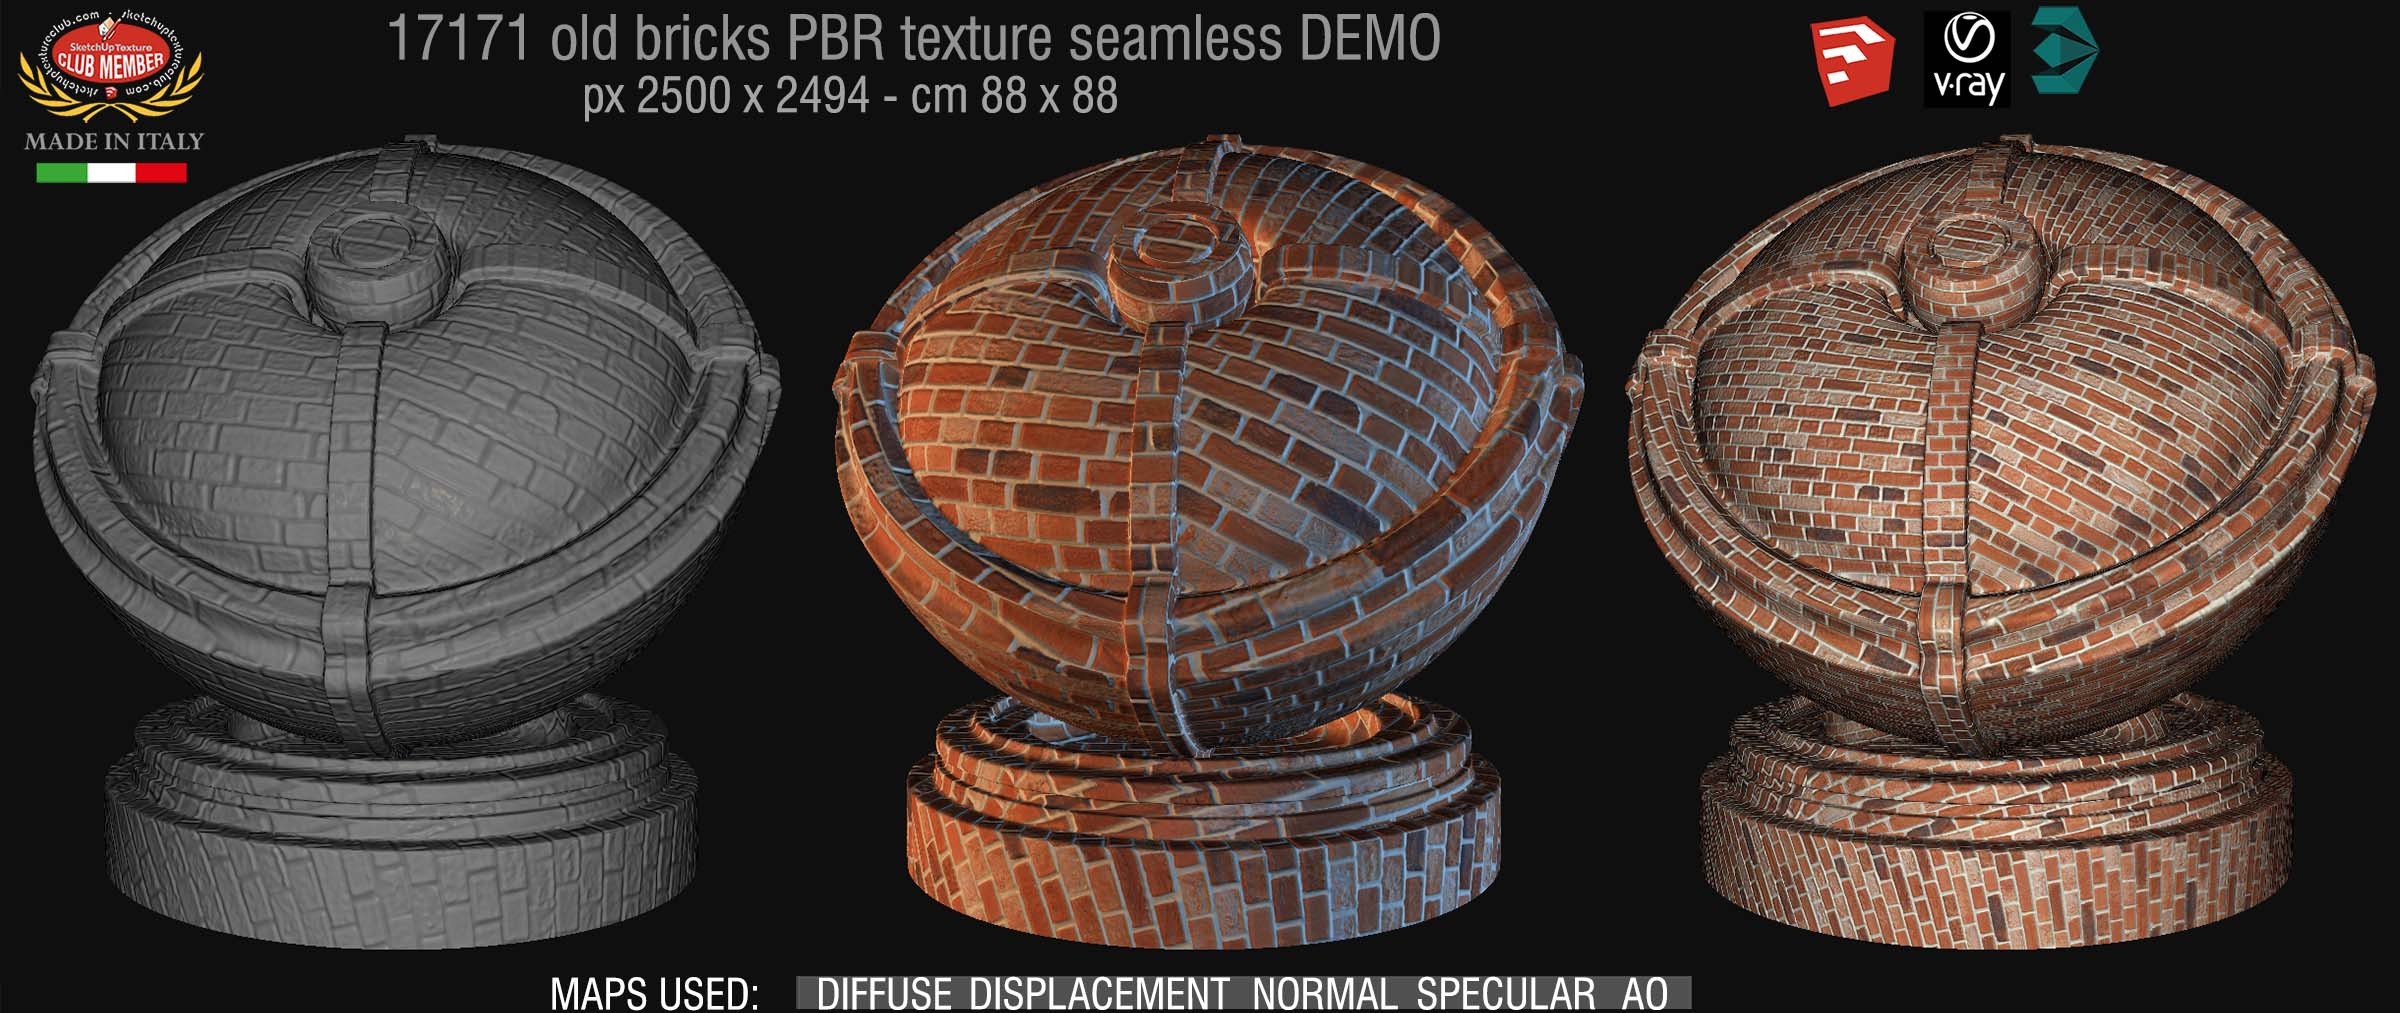 17171 Old bricks PBR texture seamless DEMO